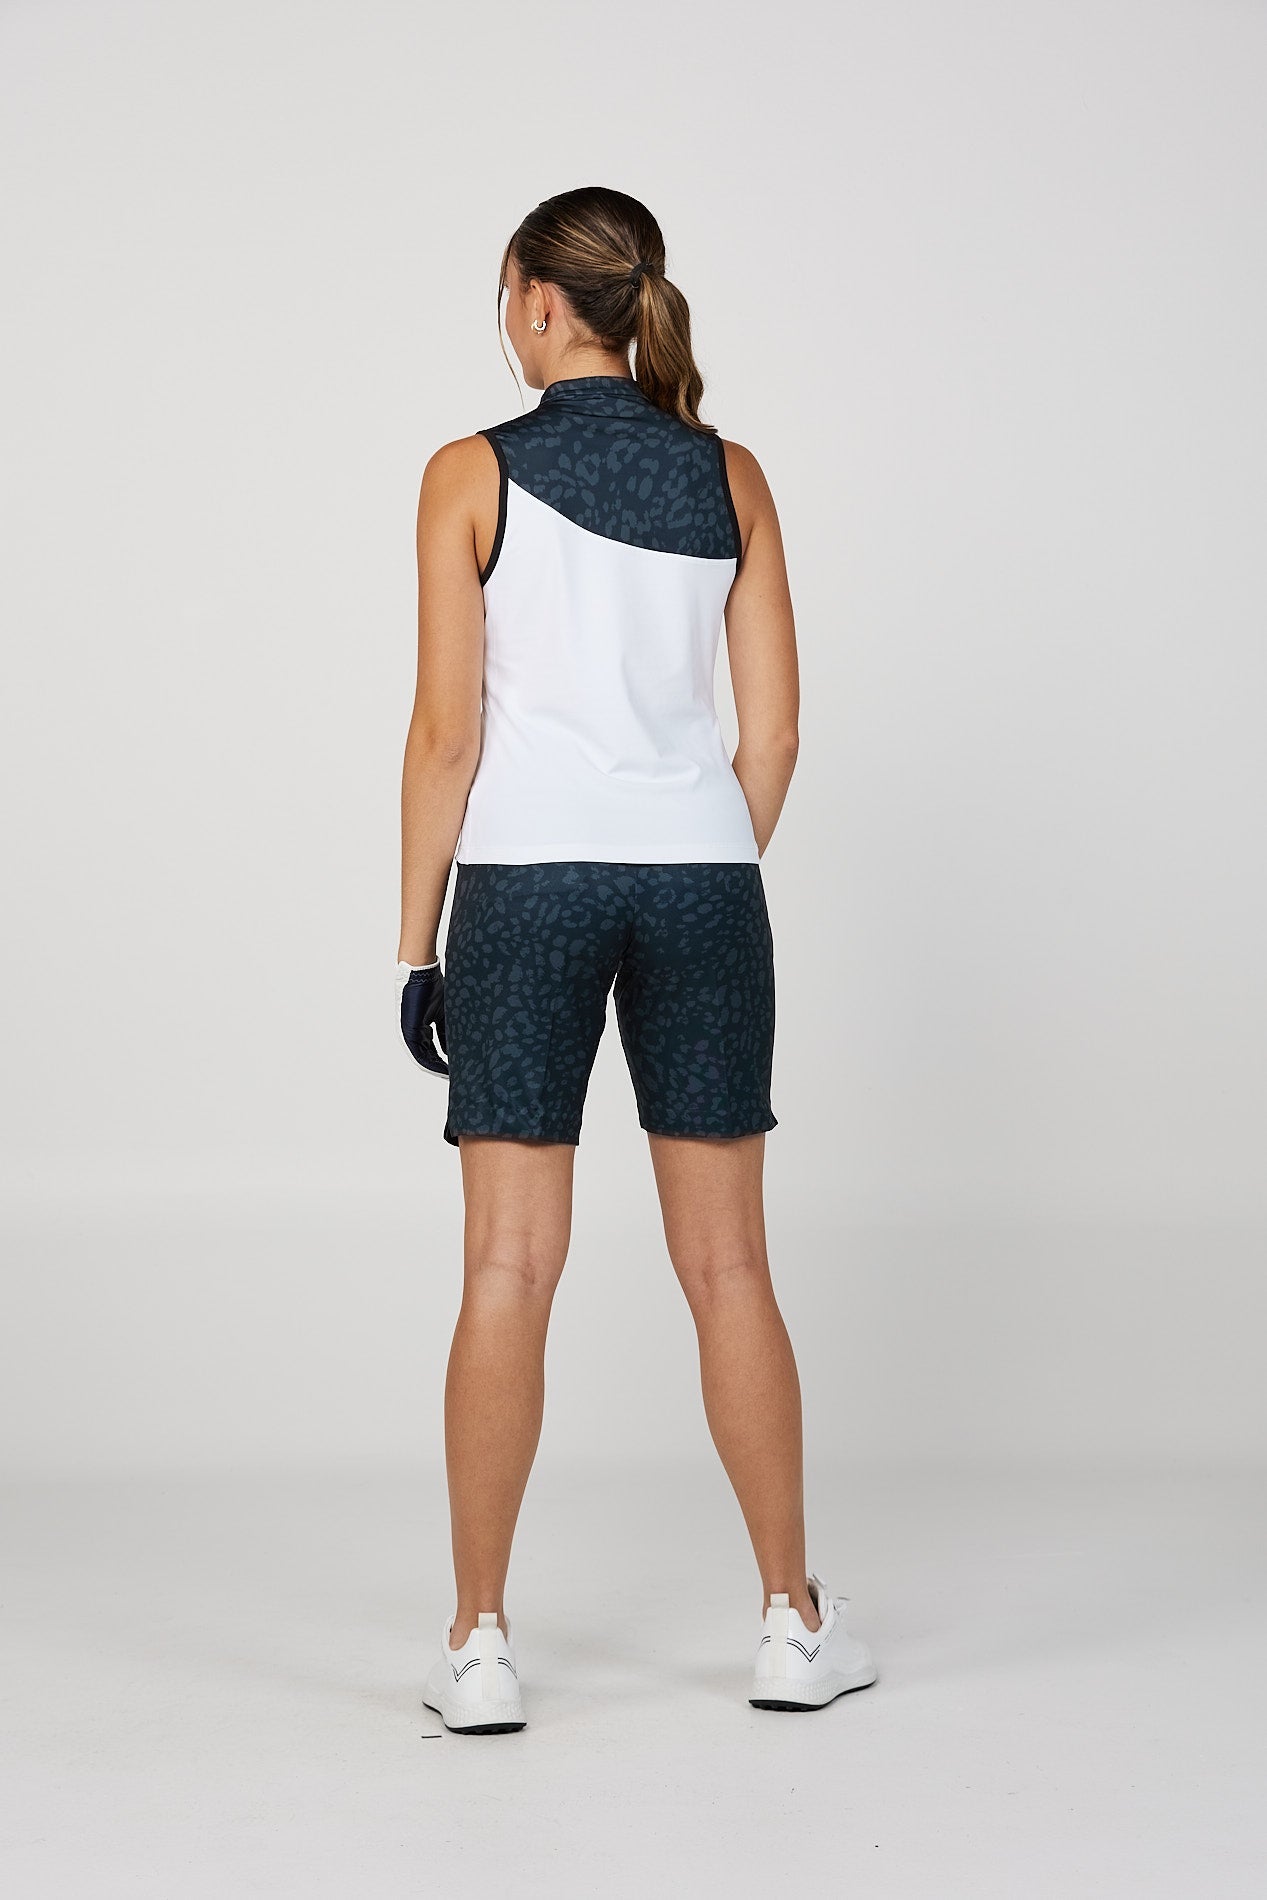 Isla Bonita Women's Golf Sleeveless Zipper Top by Sofibella, white and navy rear view